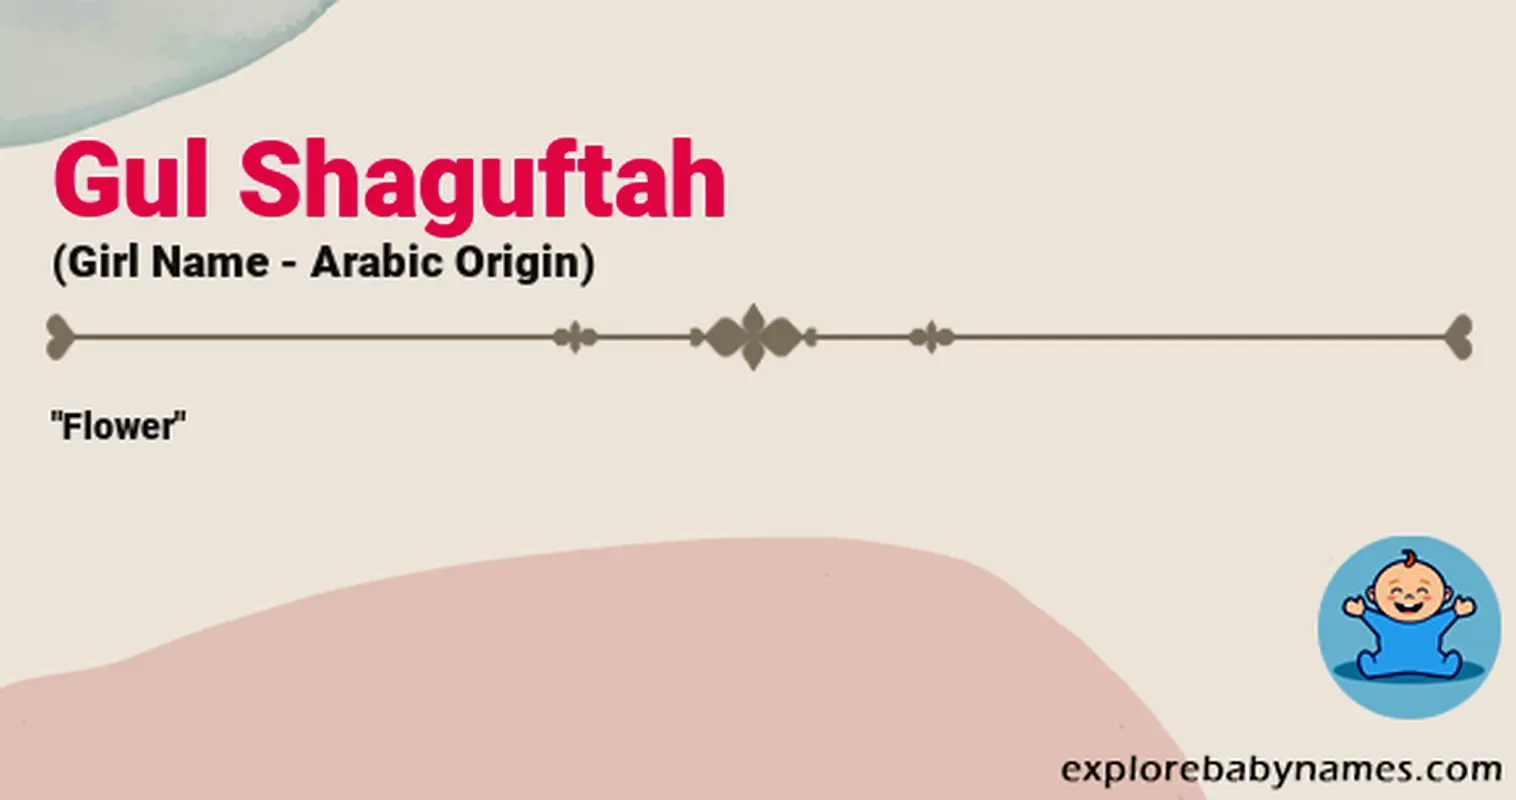 Meaning of Gul Shaguftah